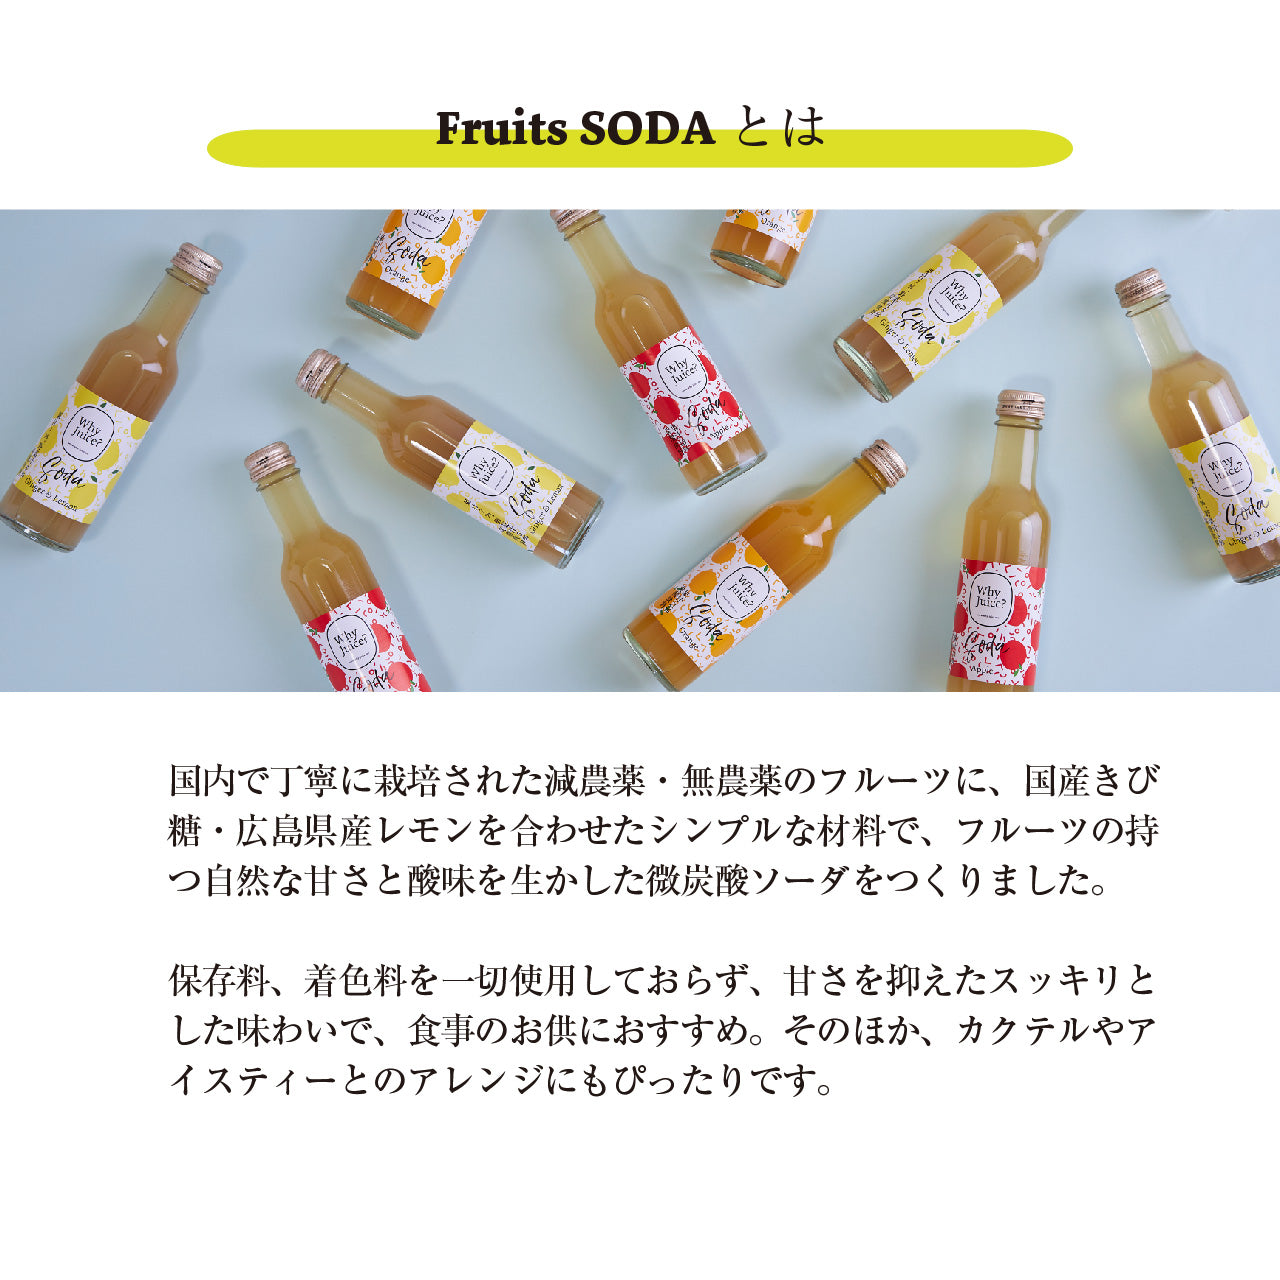 Fruits SODA 高知ジンジャー、広島レモン (30本入)